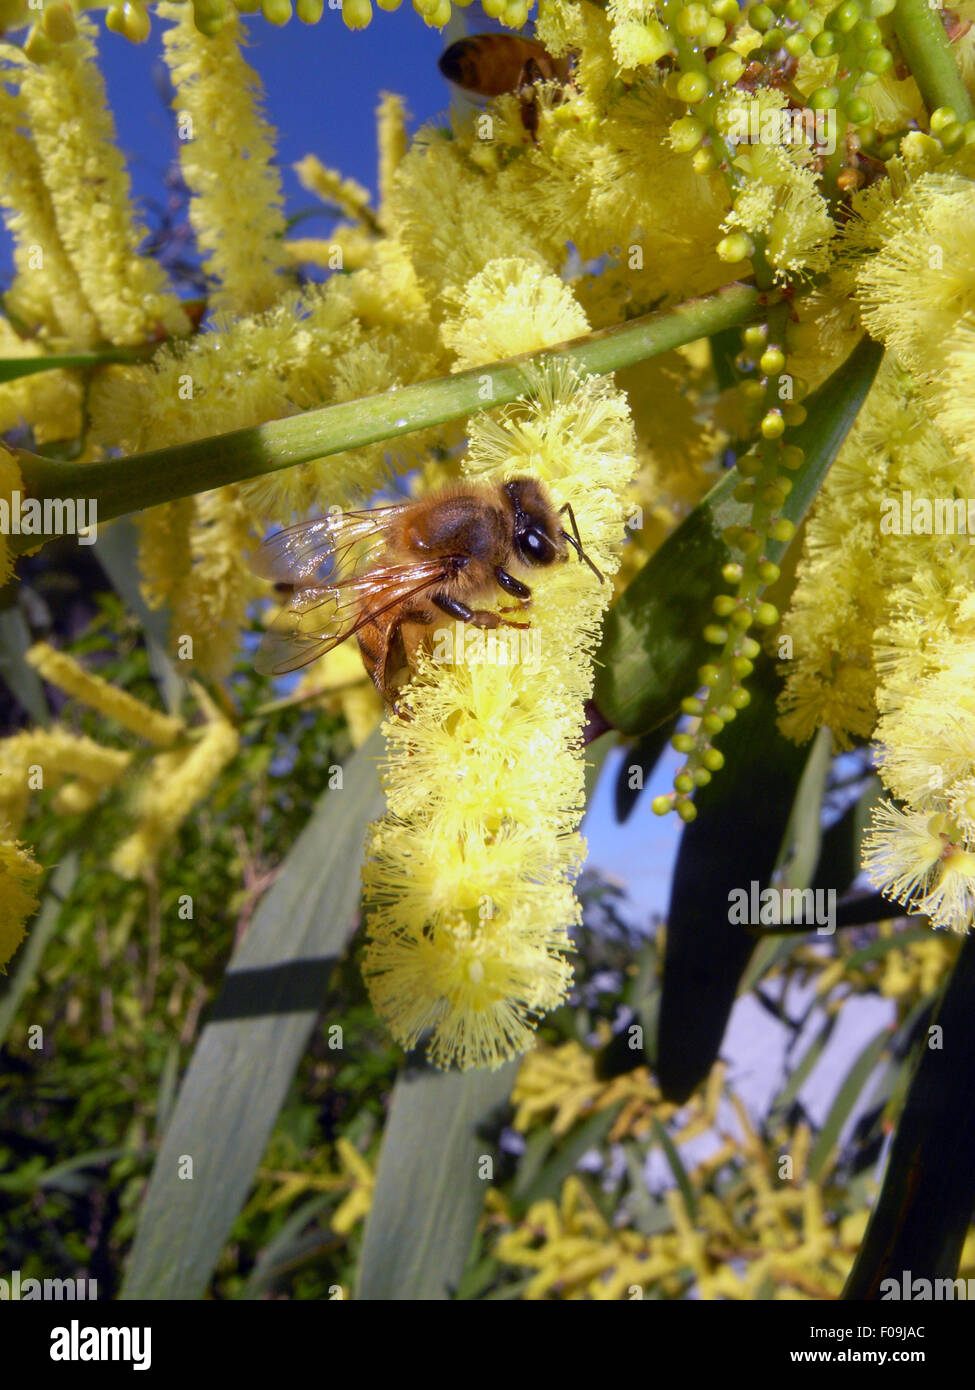 European honeybee (Apis mellifera) collecting pollen from Australian flowering wattle (Acacia sp.), Western Australia Stock Photo